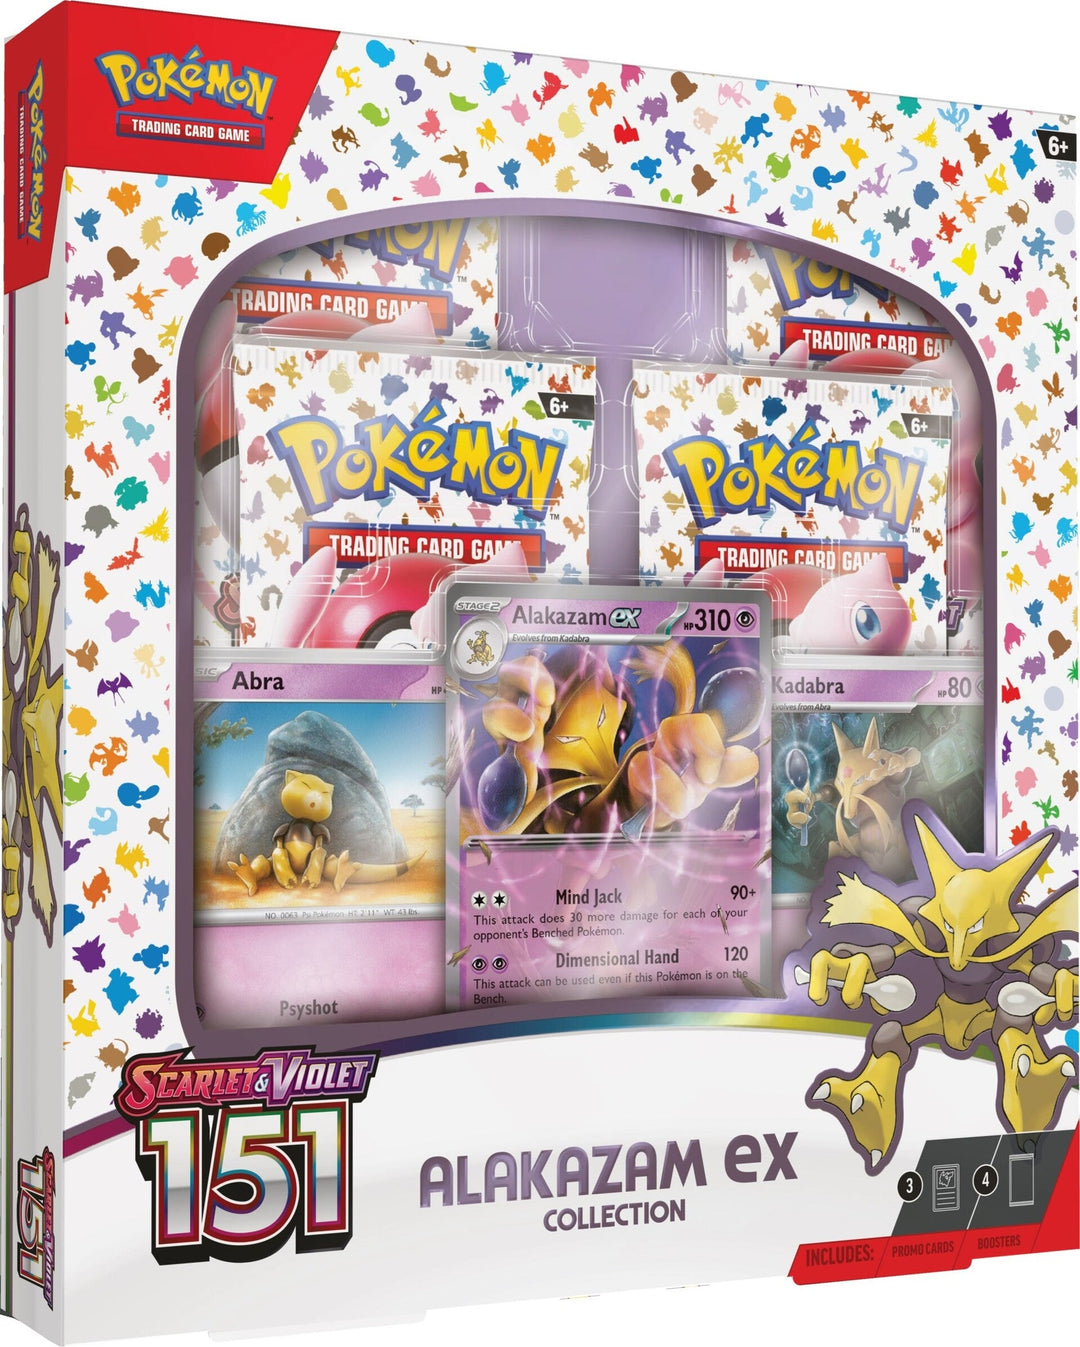 Pokémon TCG: Scarlet & Violet-151 Alakazam Ex Box SV3.5